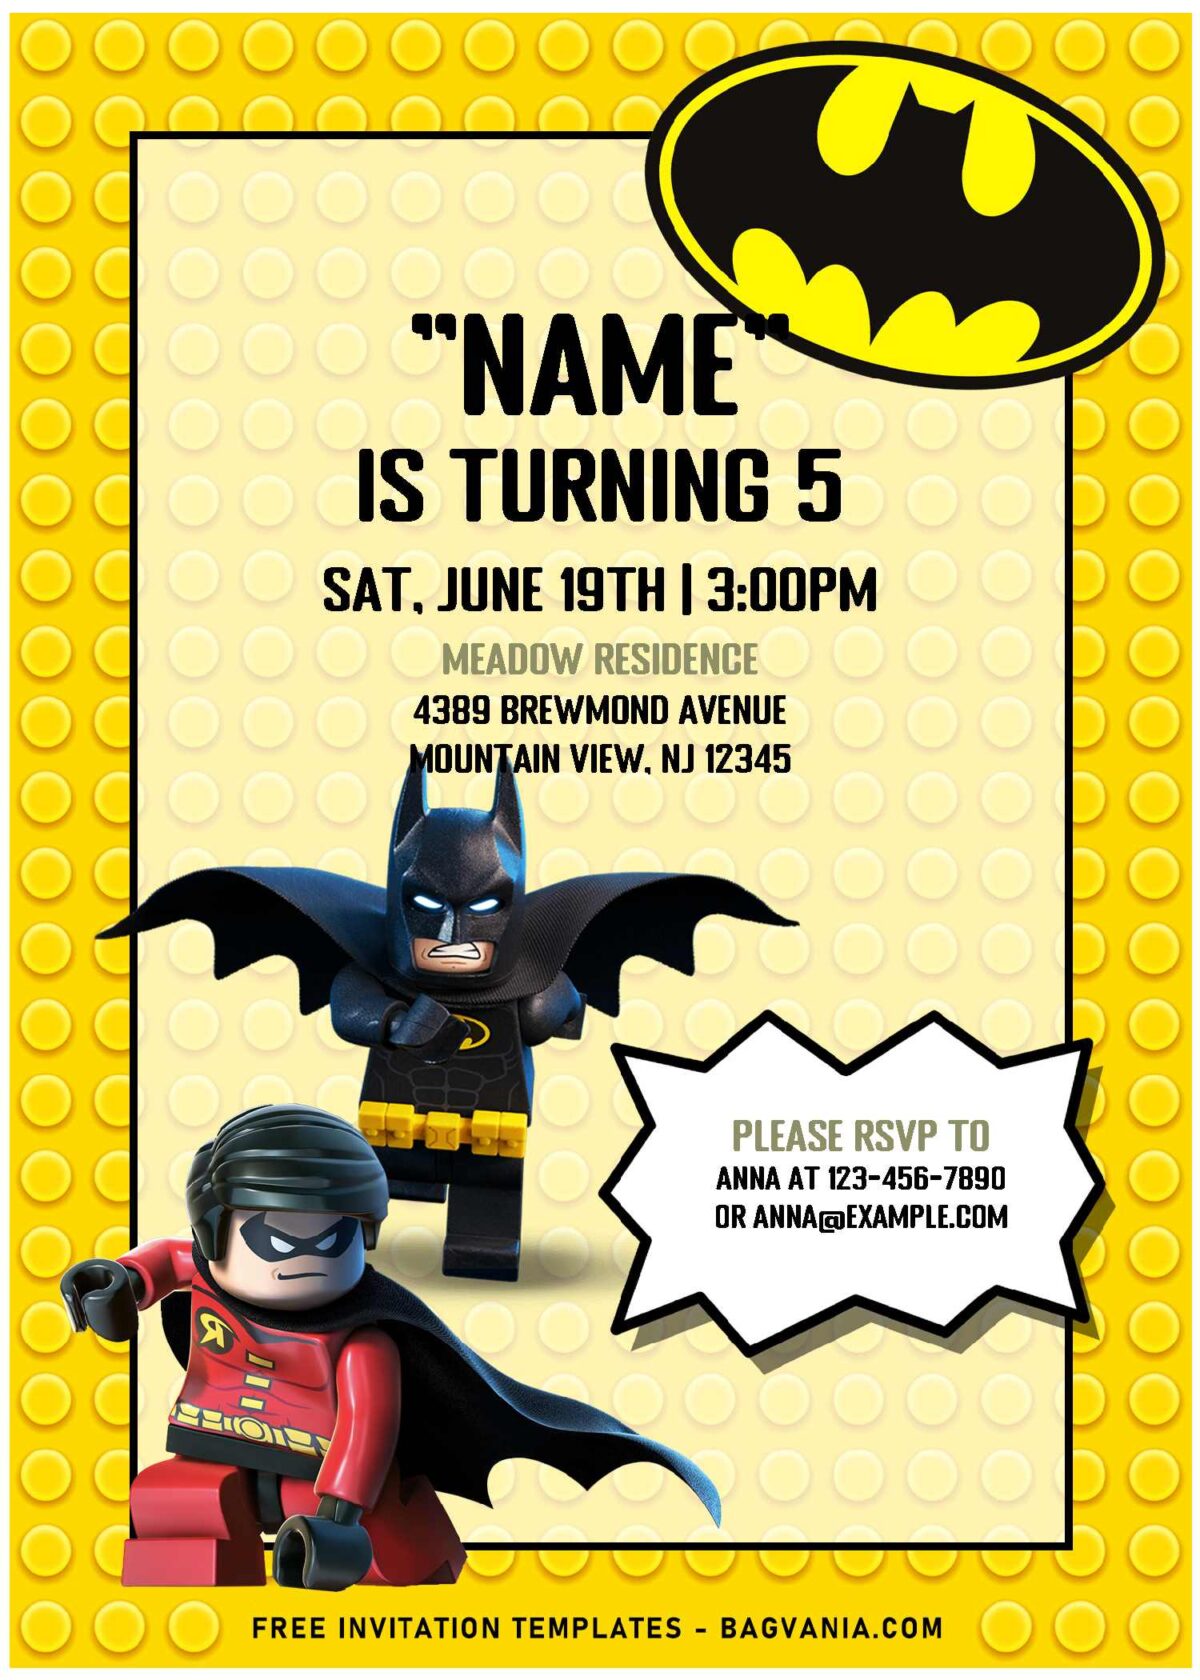 (Free Editable PDF) Super Cool Lego Batman Birthday Invitation Templates with yellow brick background